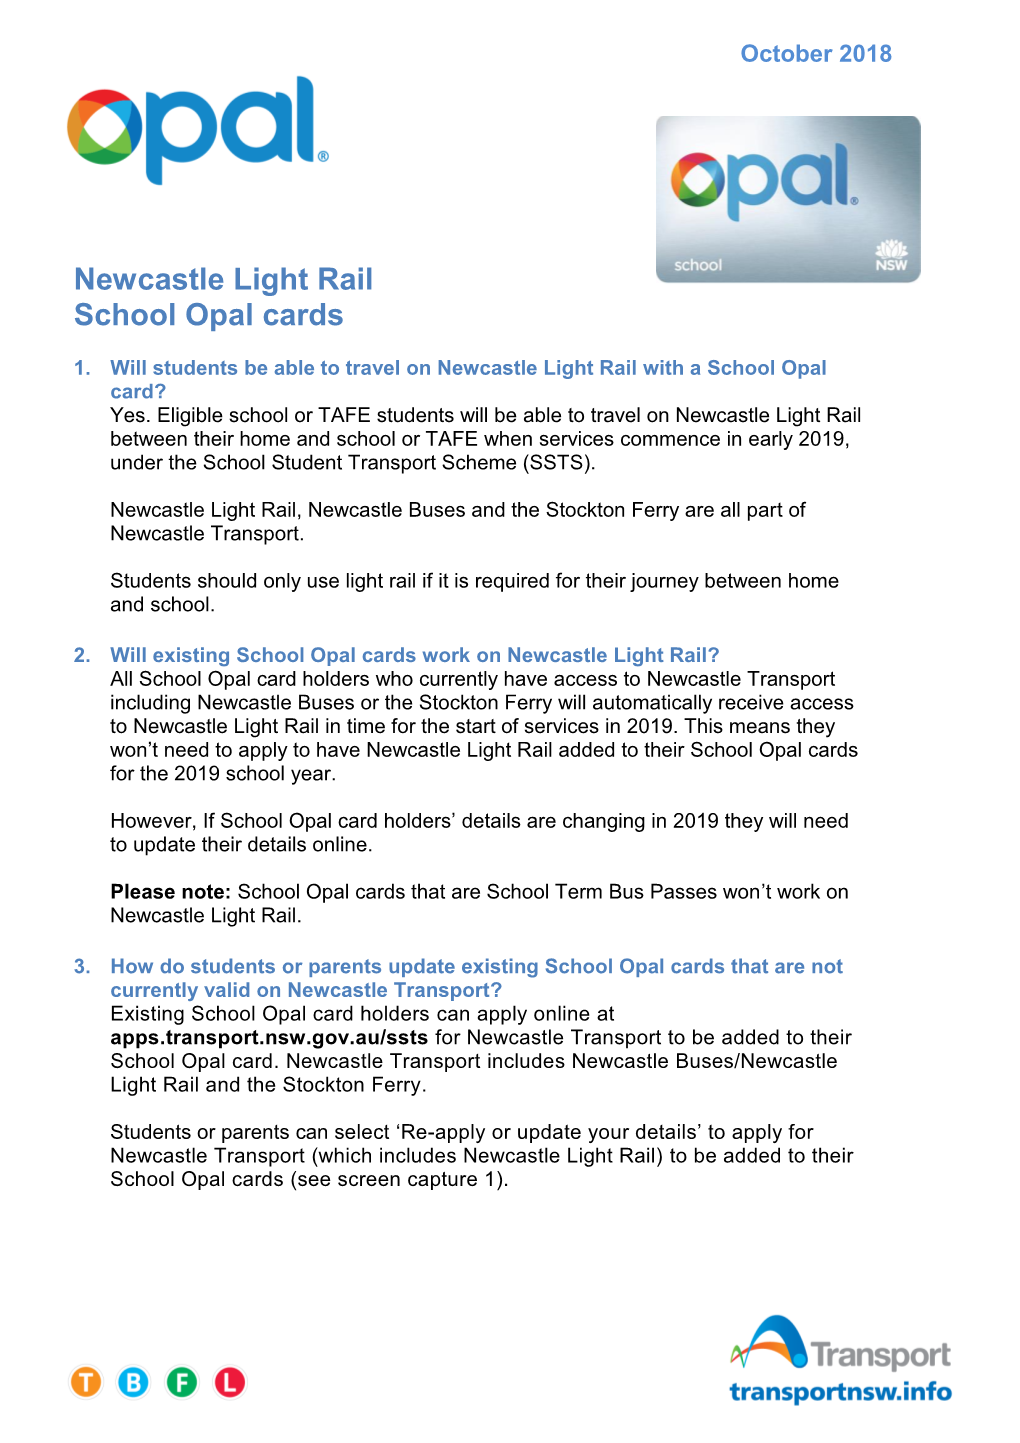 Newcastle Light Rail School Opal Cards